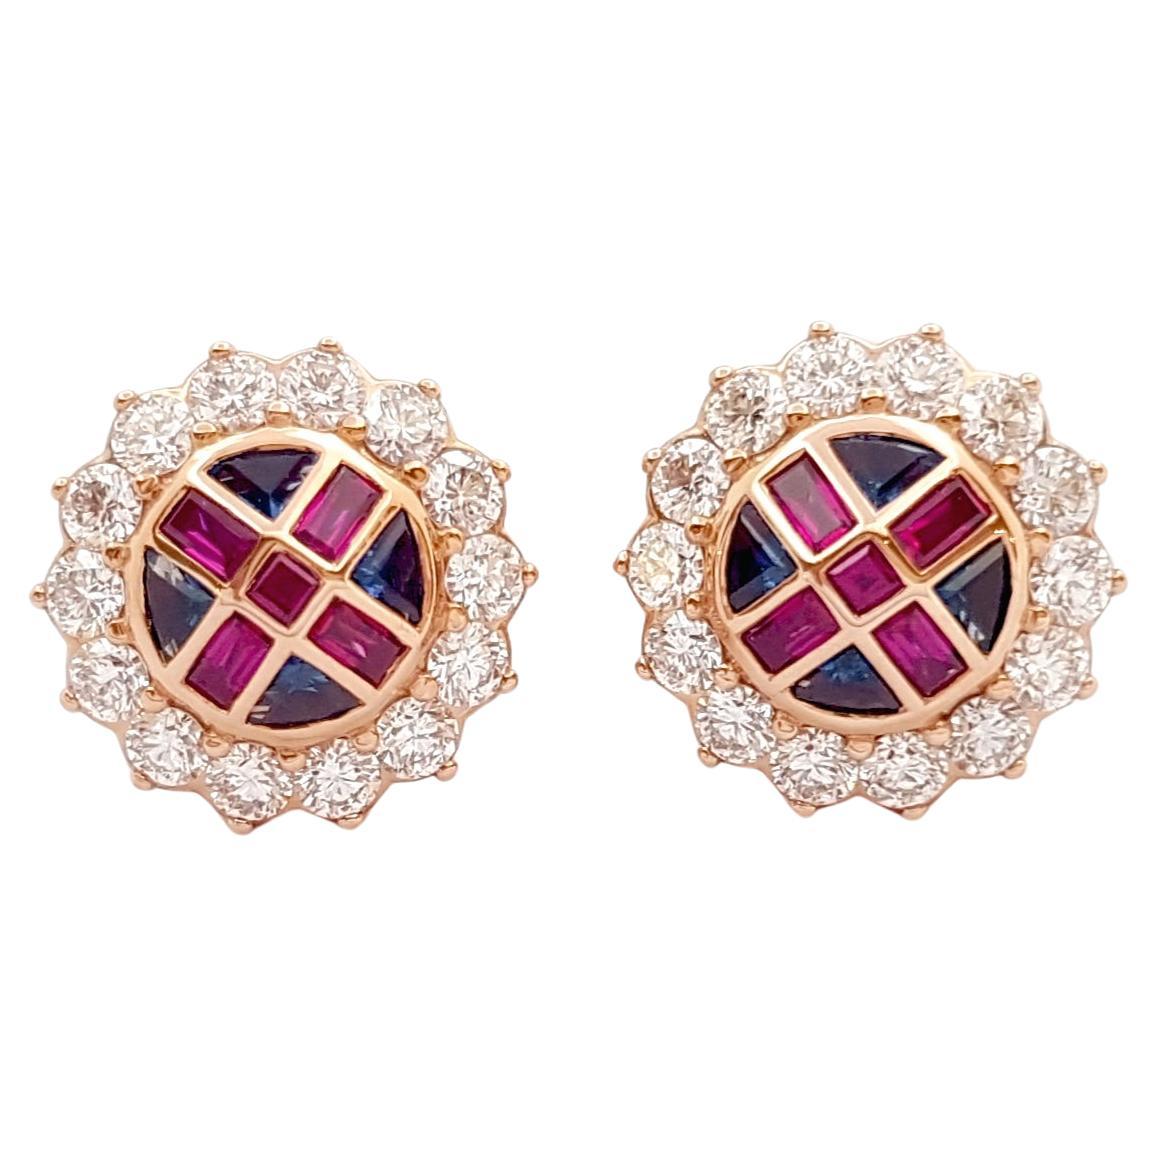 Ruby, Blue Sapphire and Diamond Earrings set in 18K Rose Gold Settings